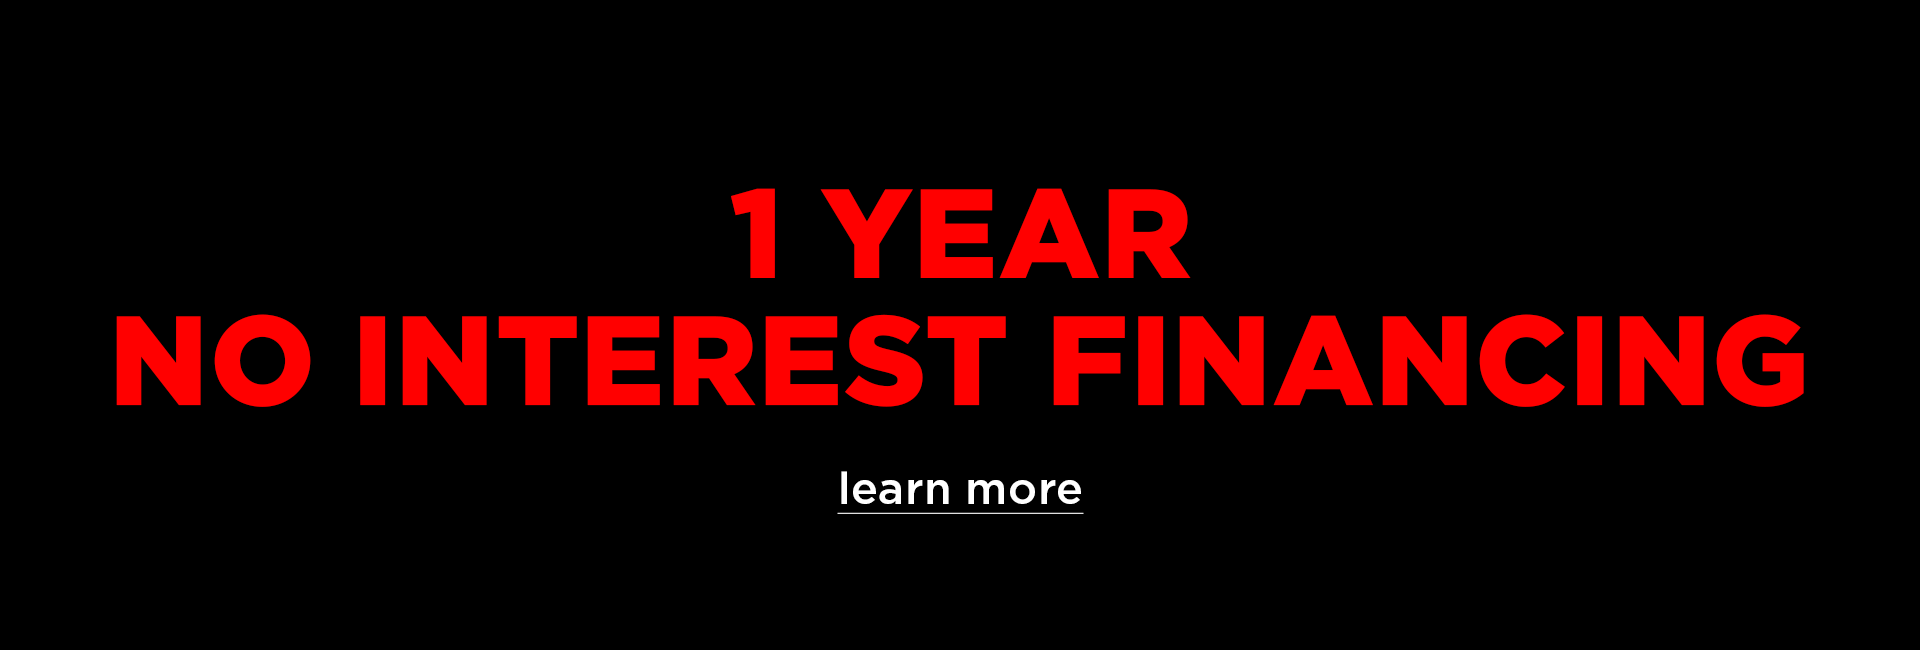 1 year no interest financing